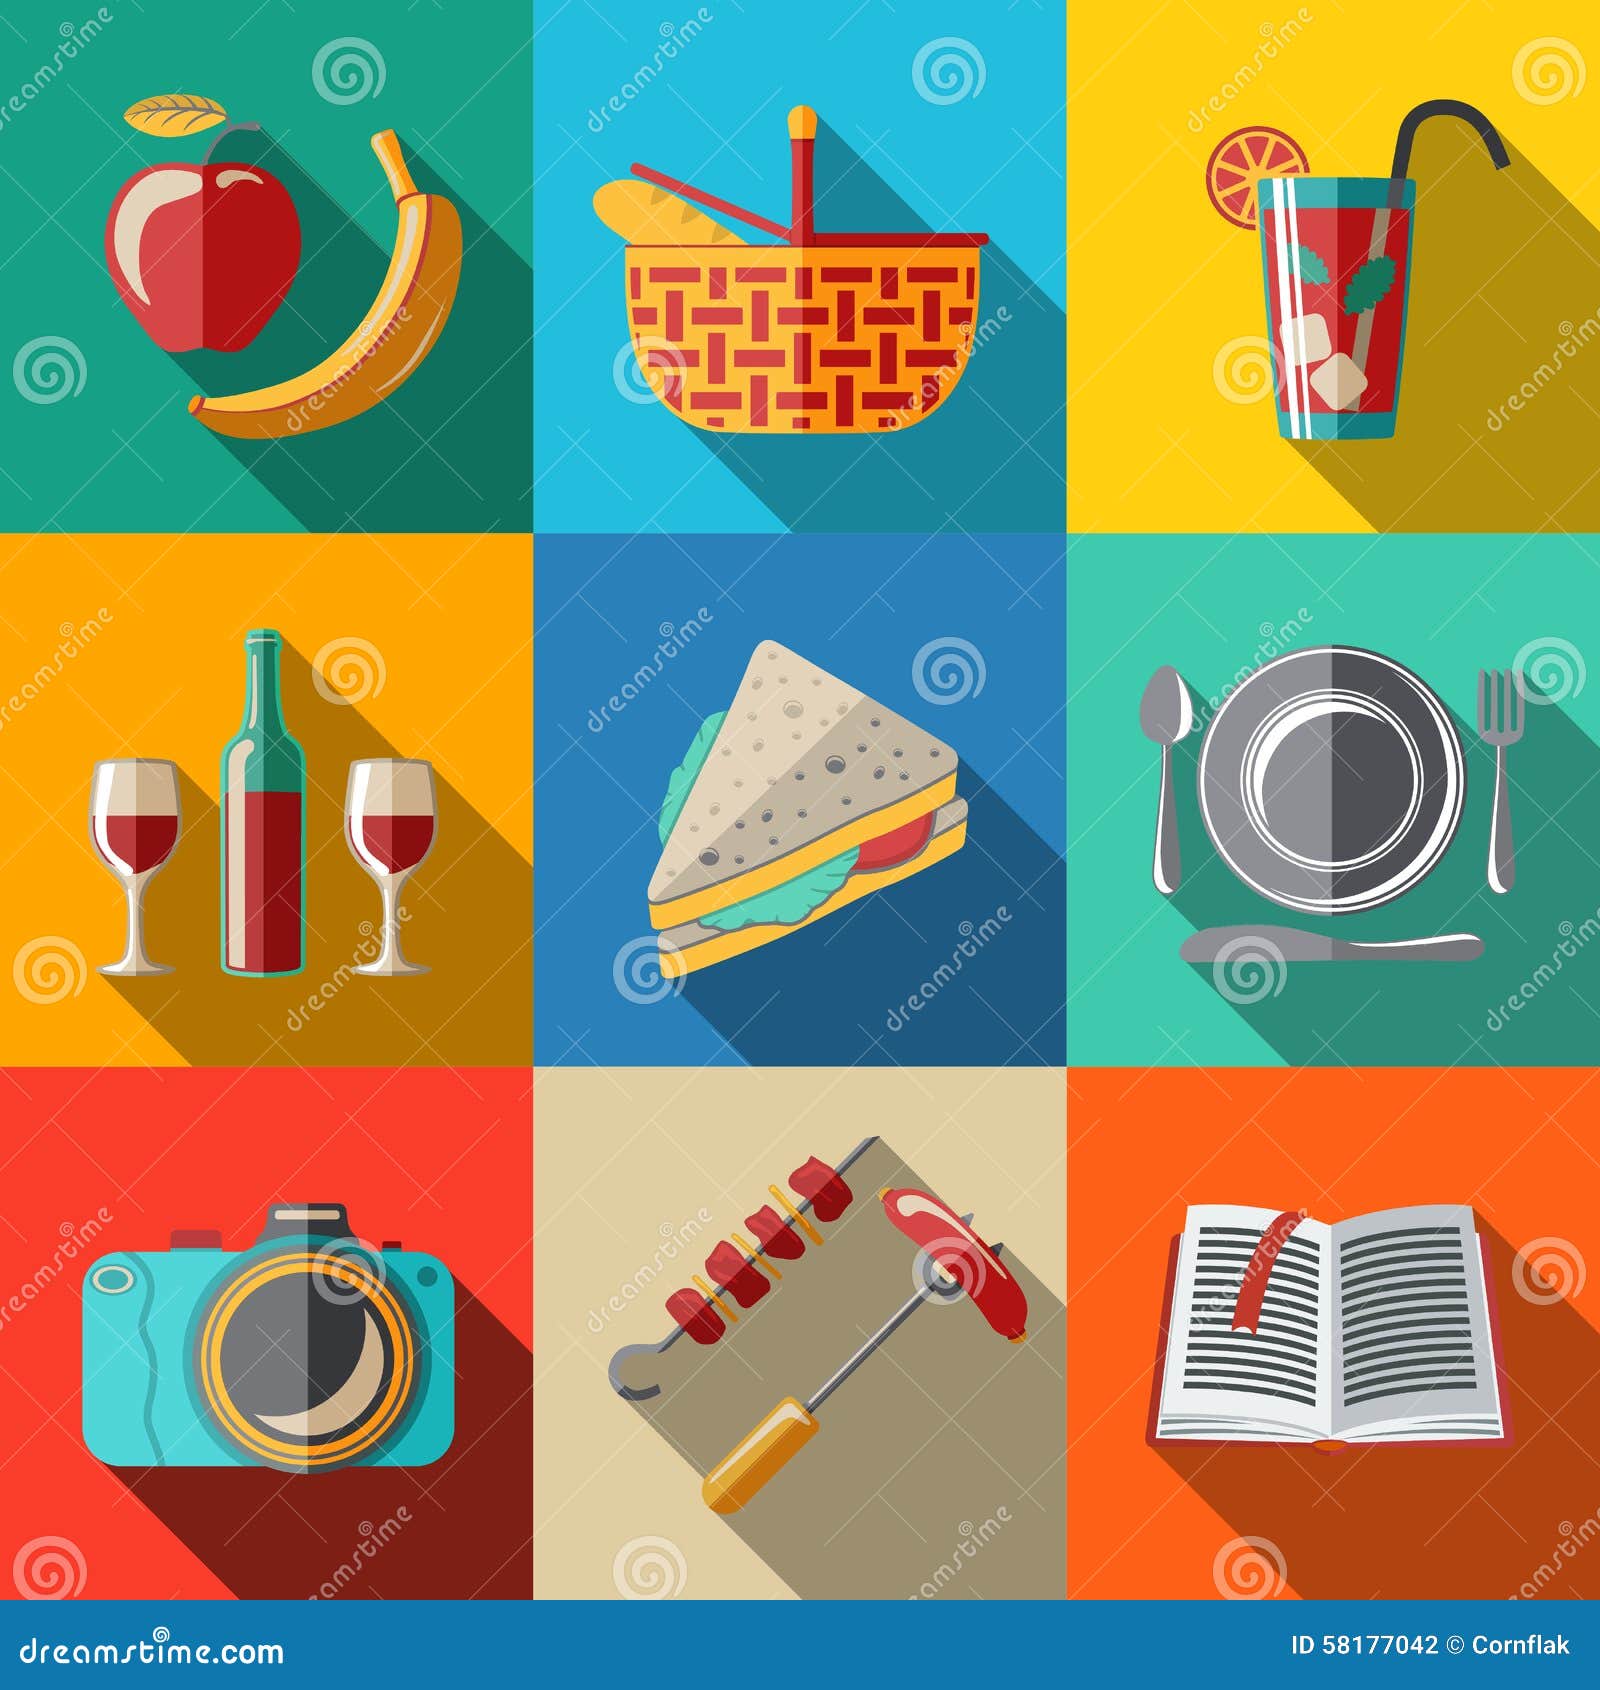 flat icons set, picnic - basket, plate, spoon